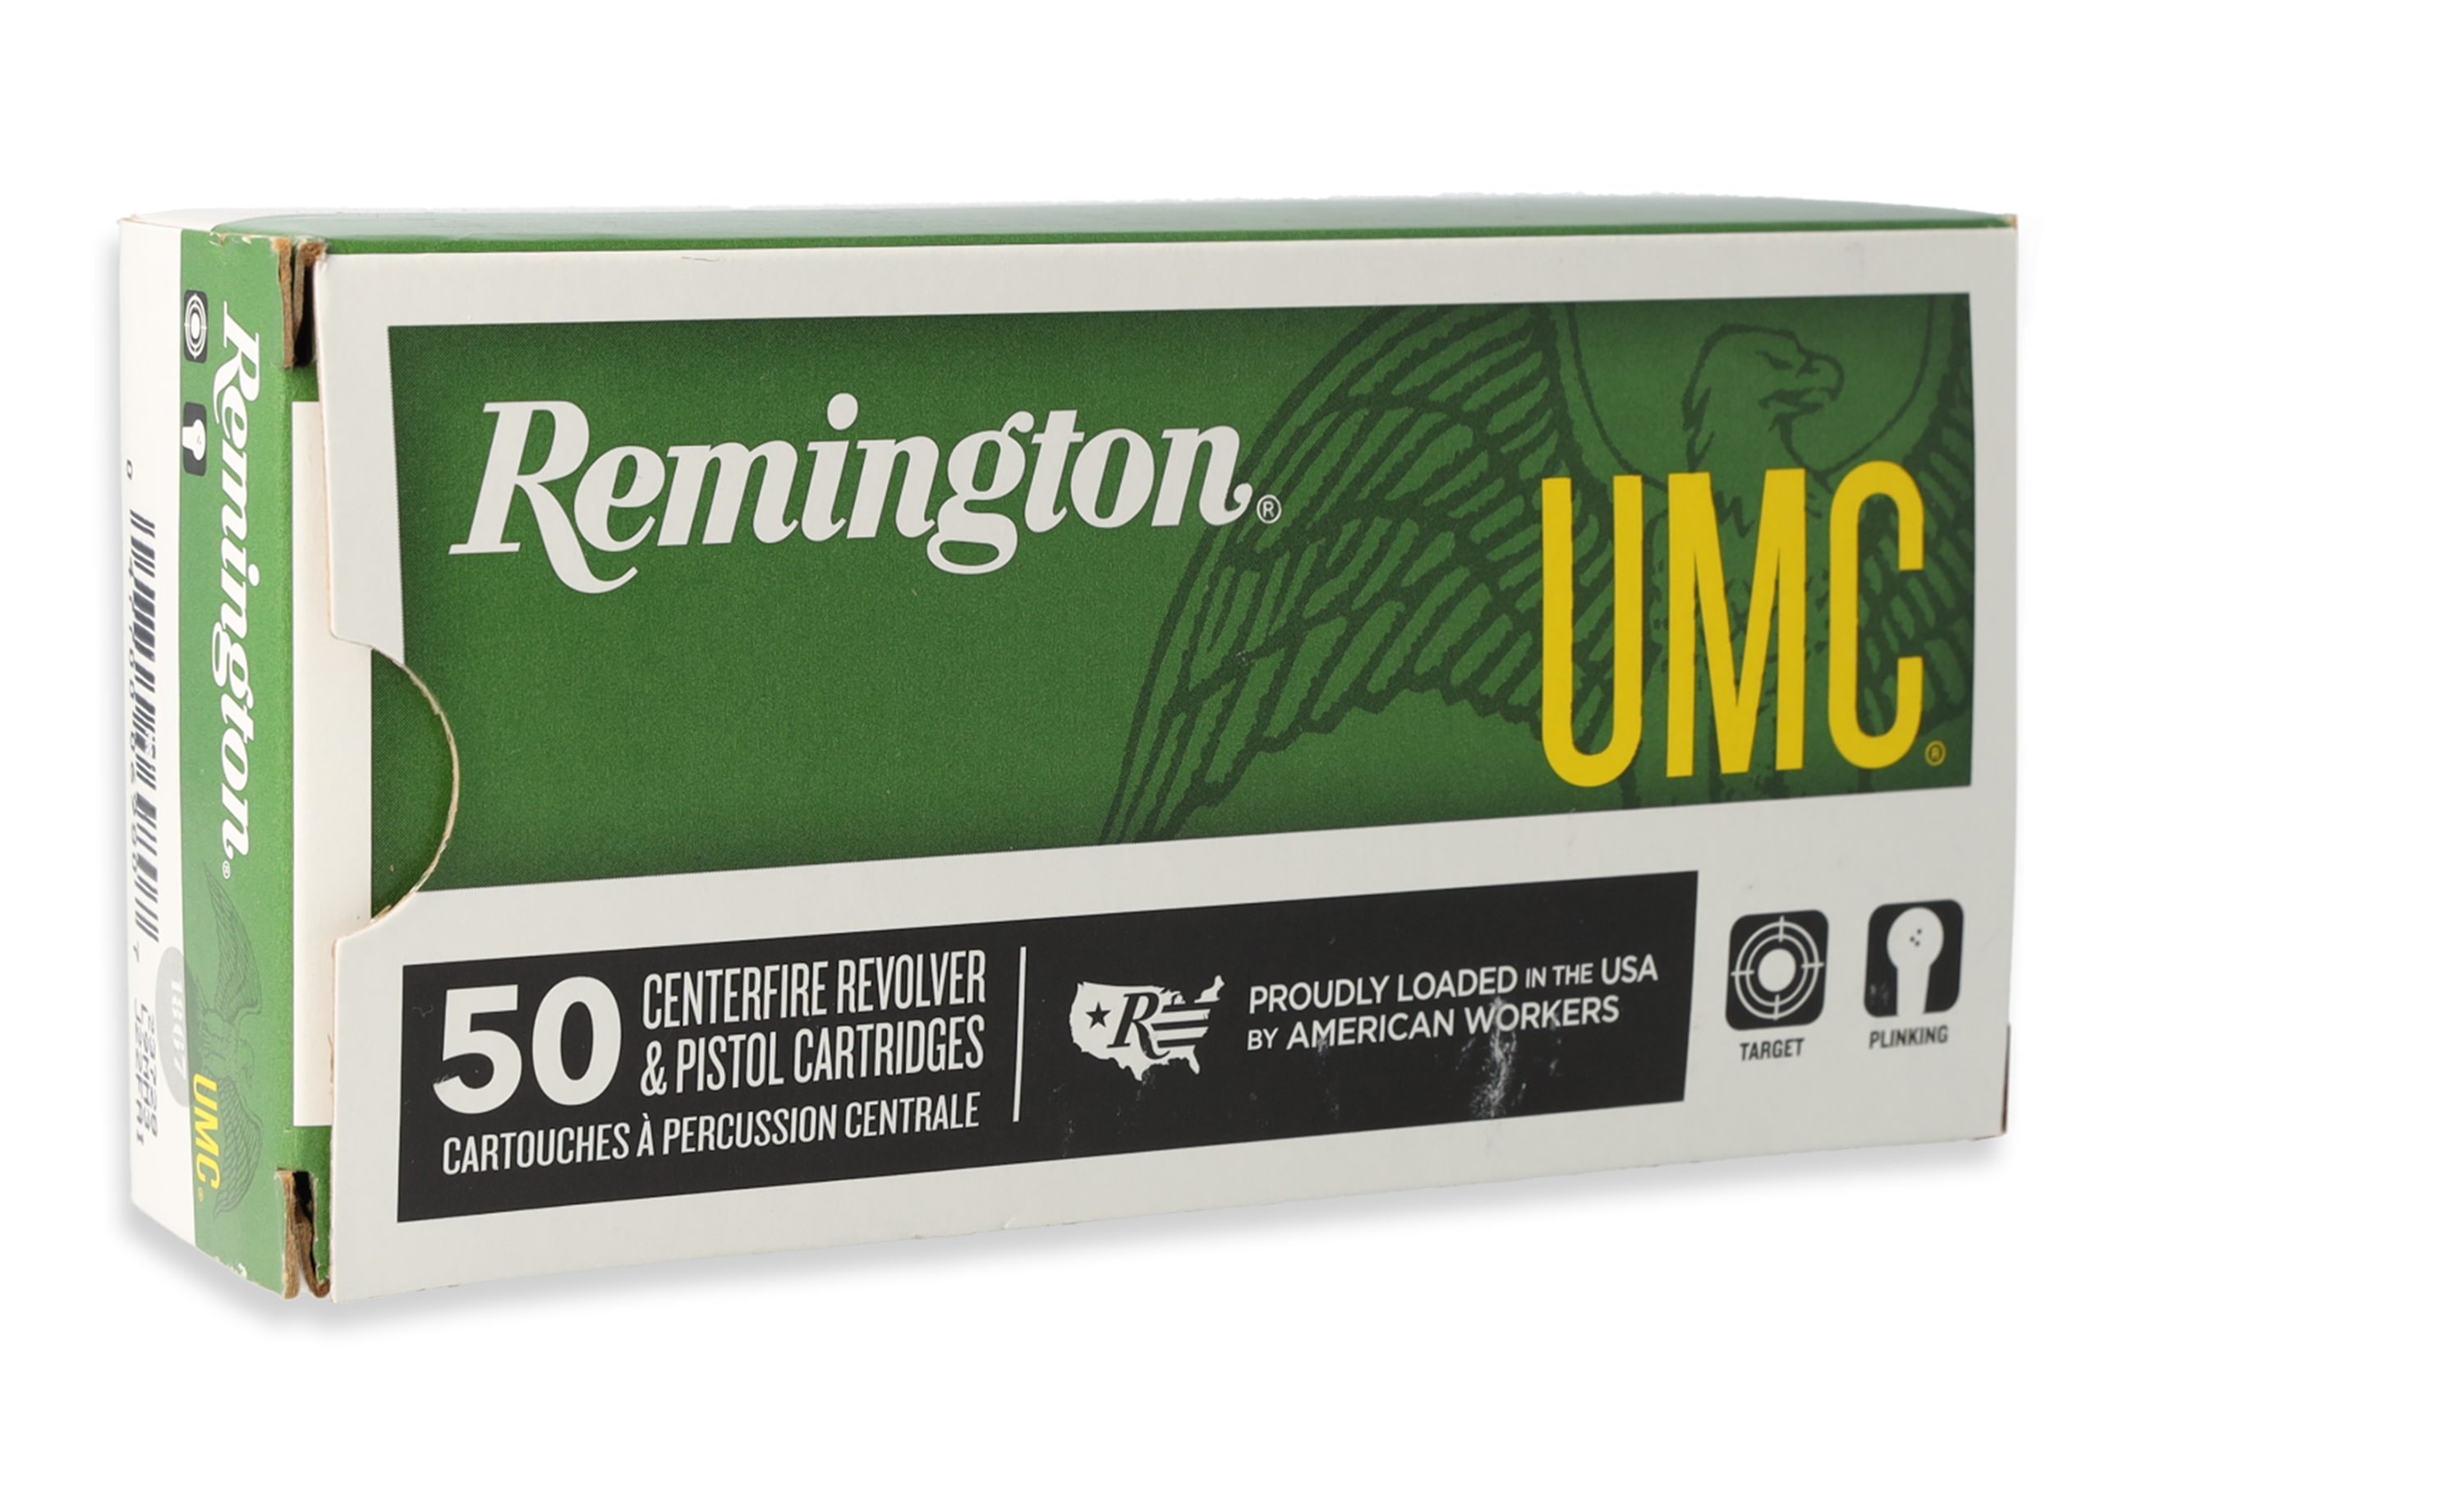 Remington UMC Handgun Ammo - .32 ACP - 71 Grain - 50 rounds